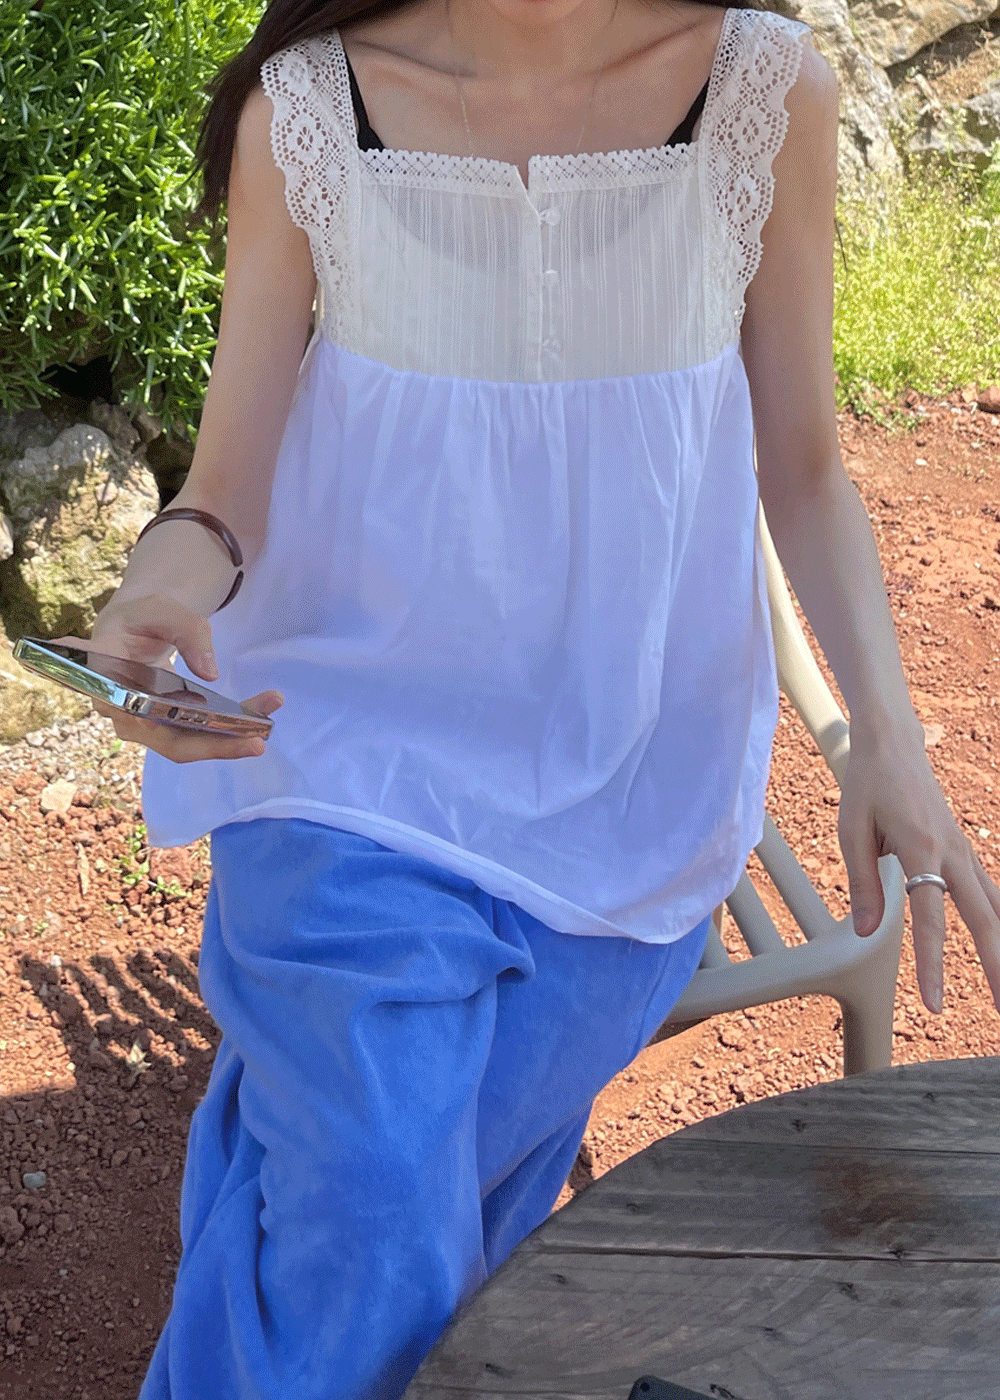 Lace sleeveless